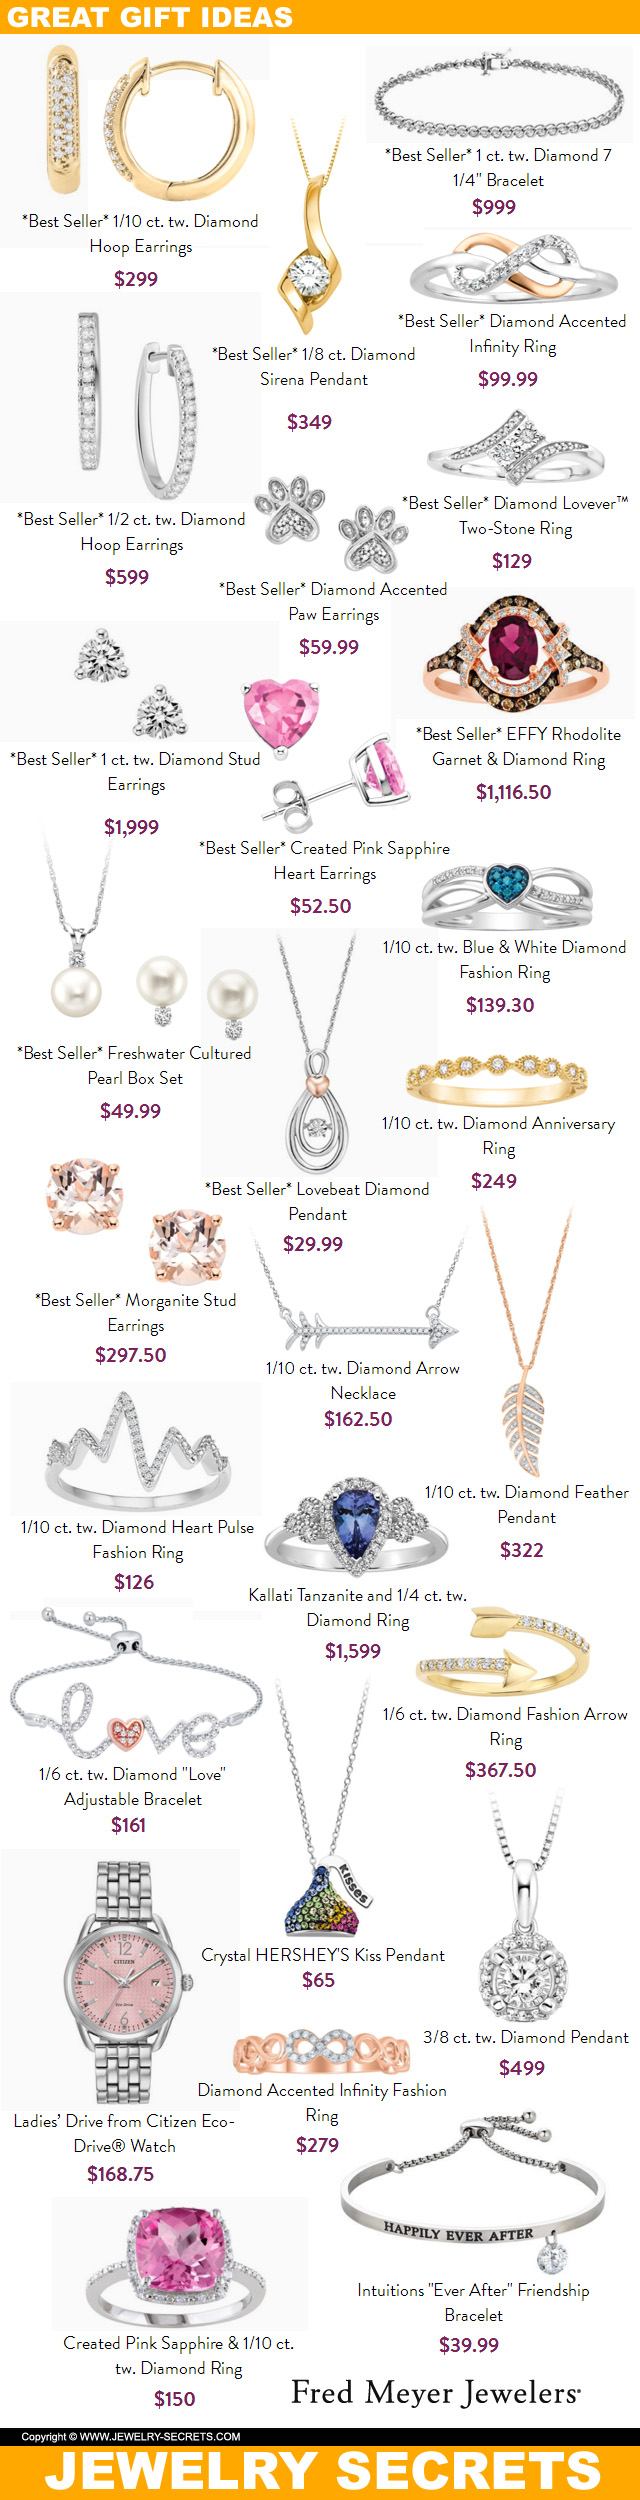 Great Jewelry Gift Ideas